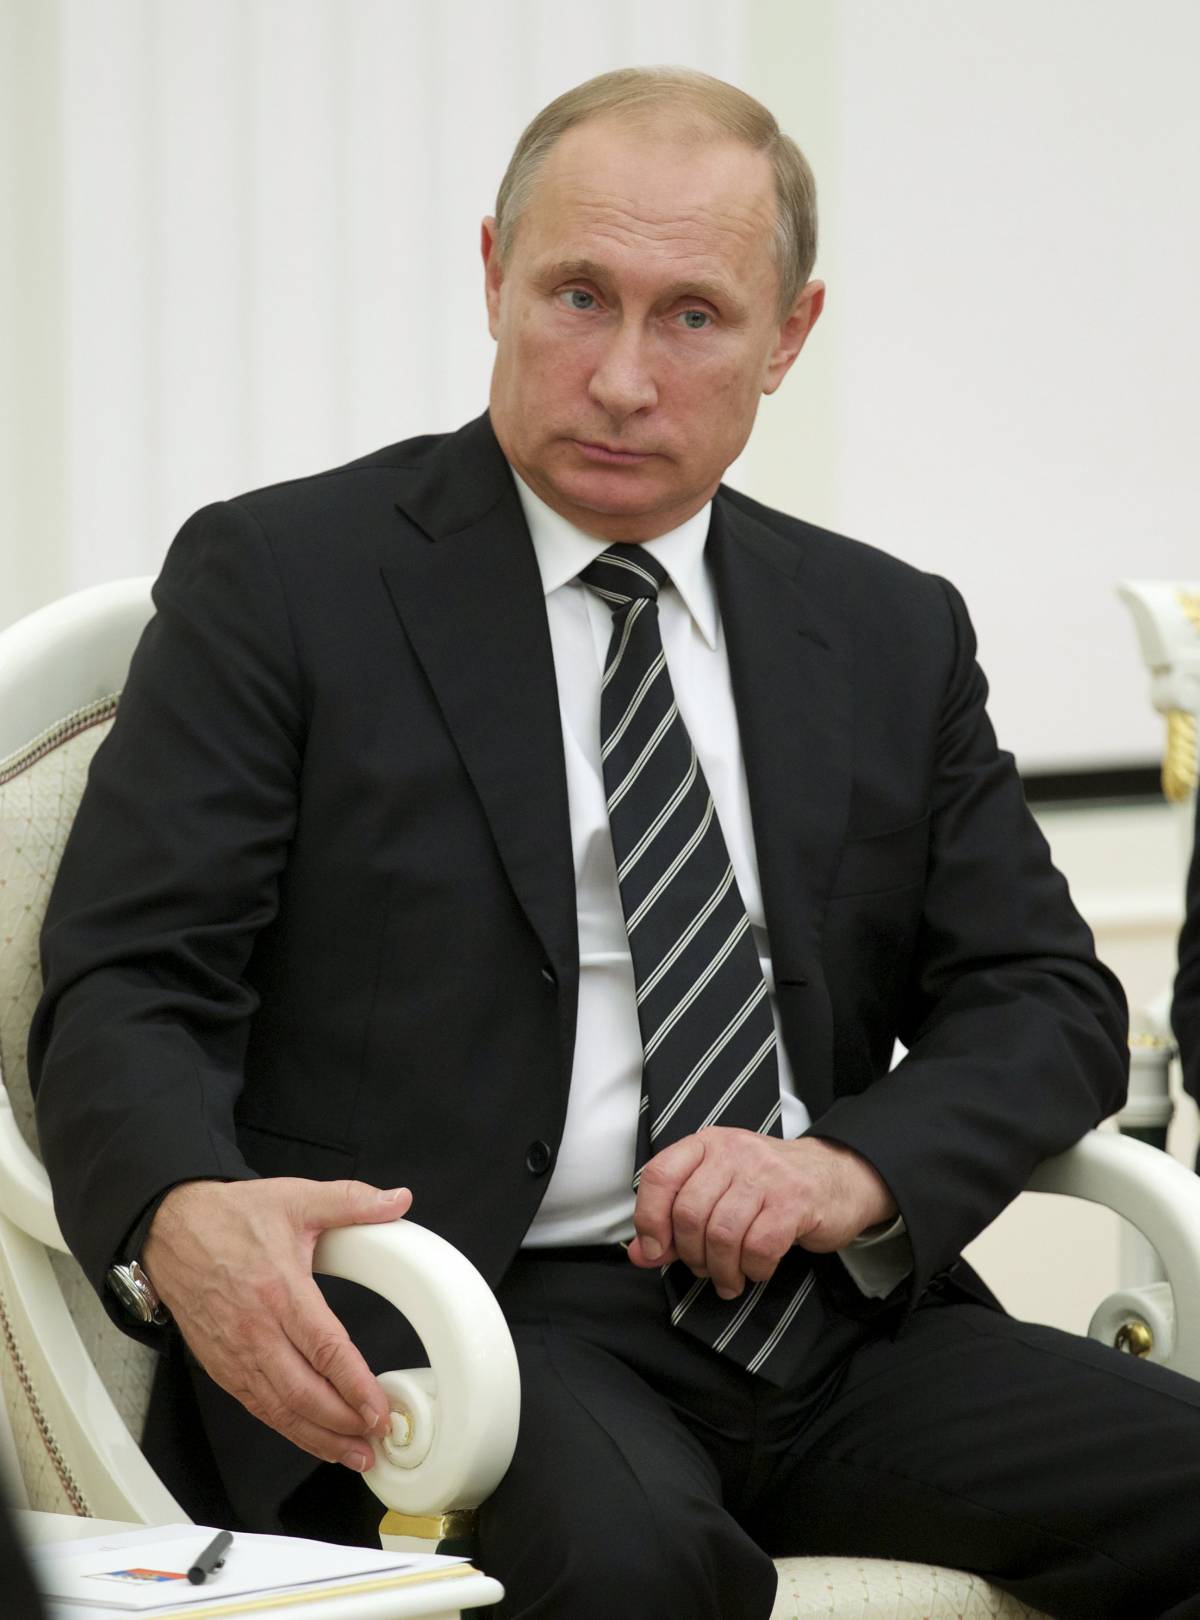 Putin: "Raid contro Isis con o senza America"